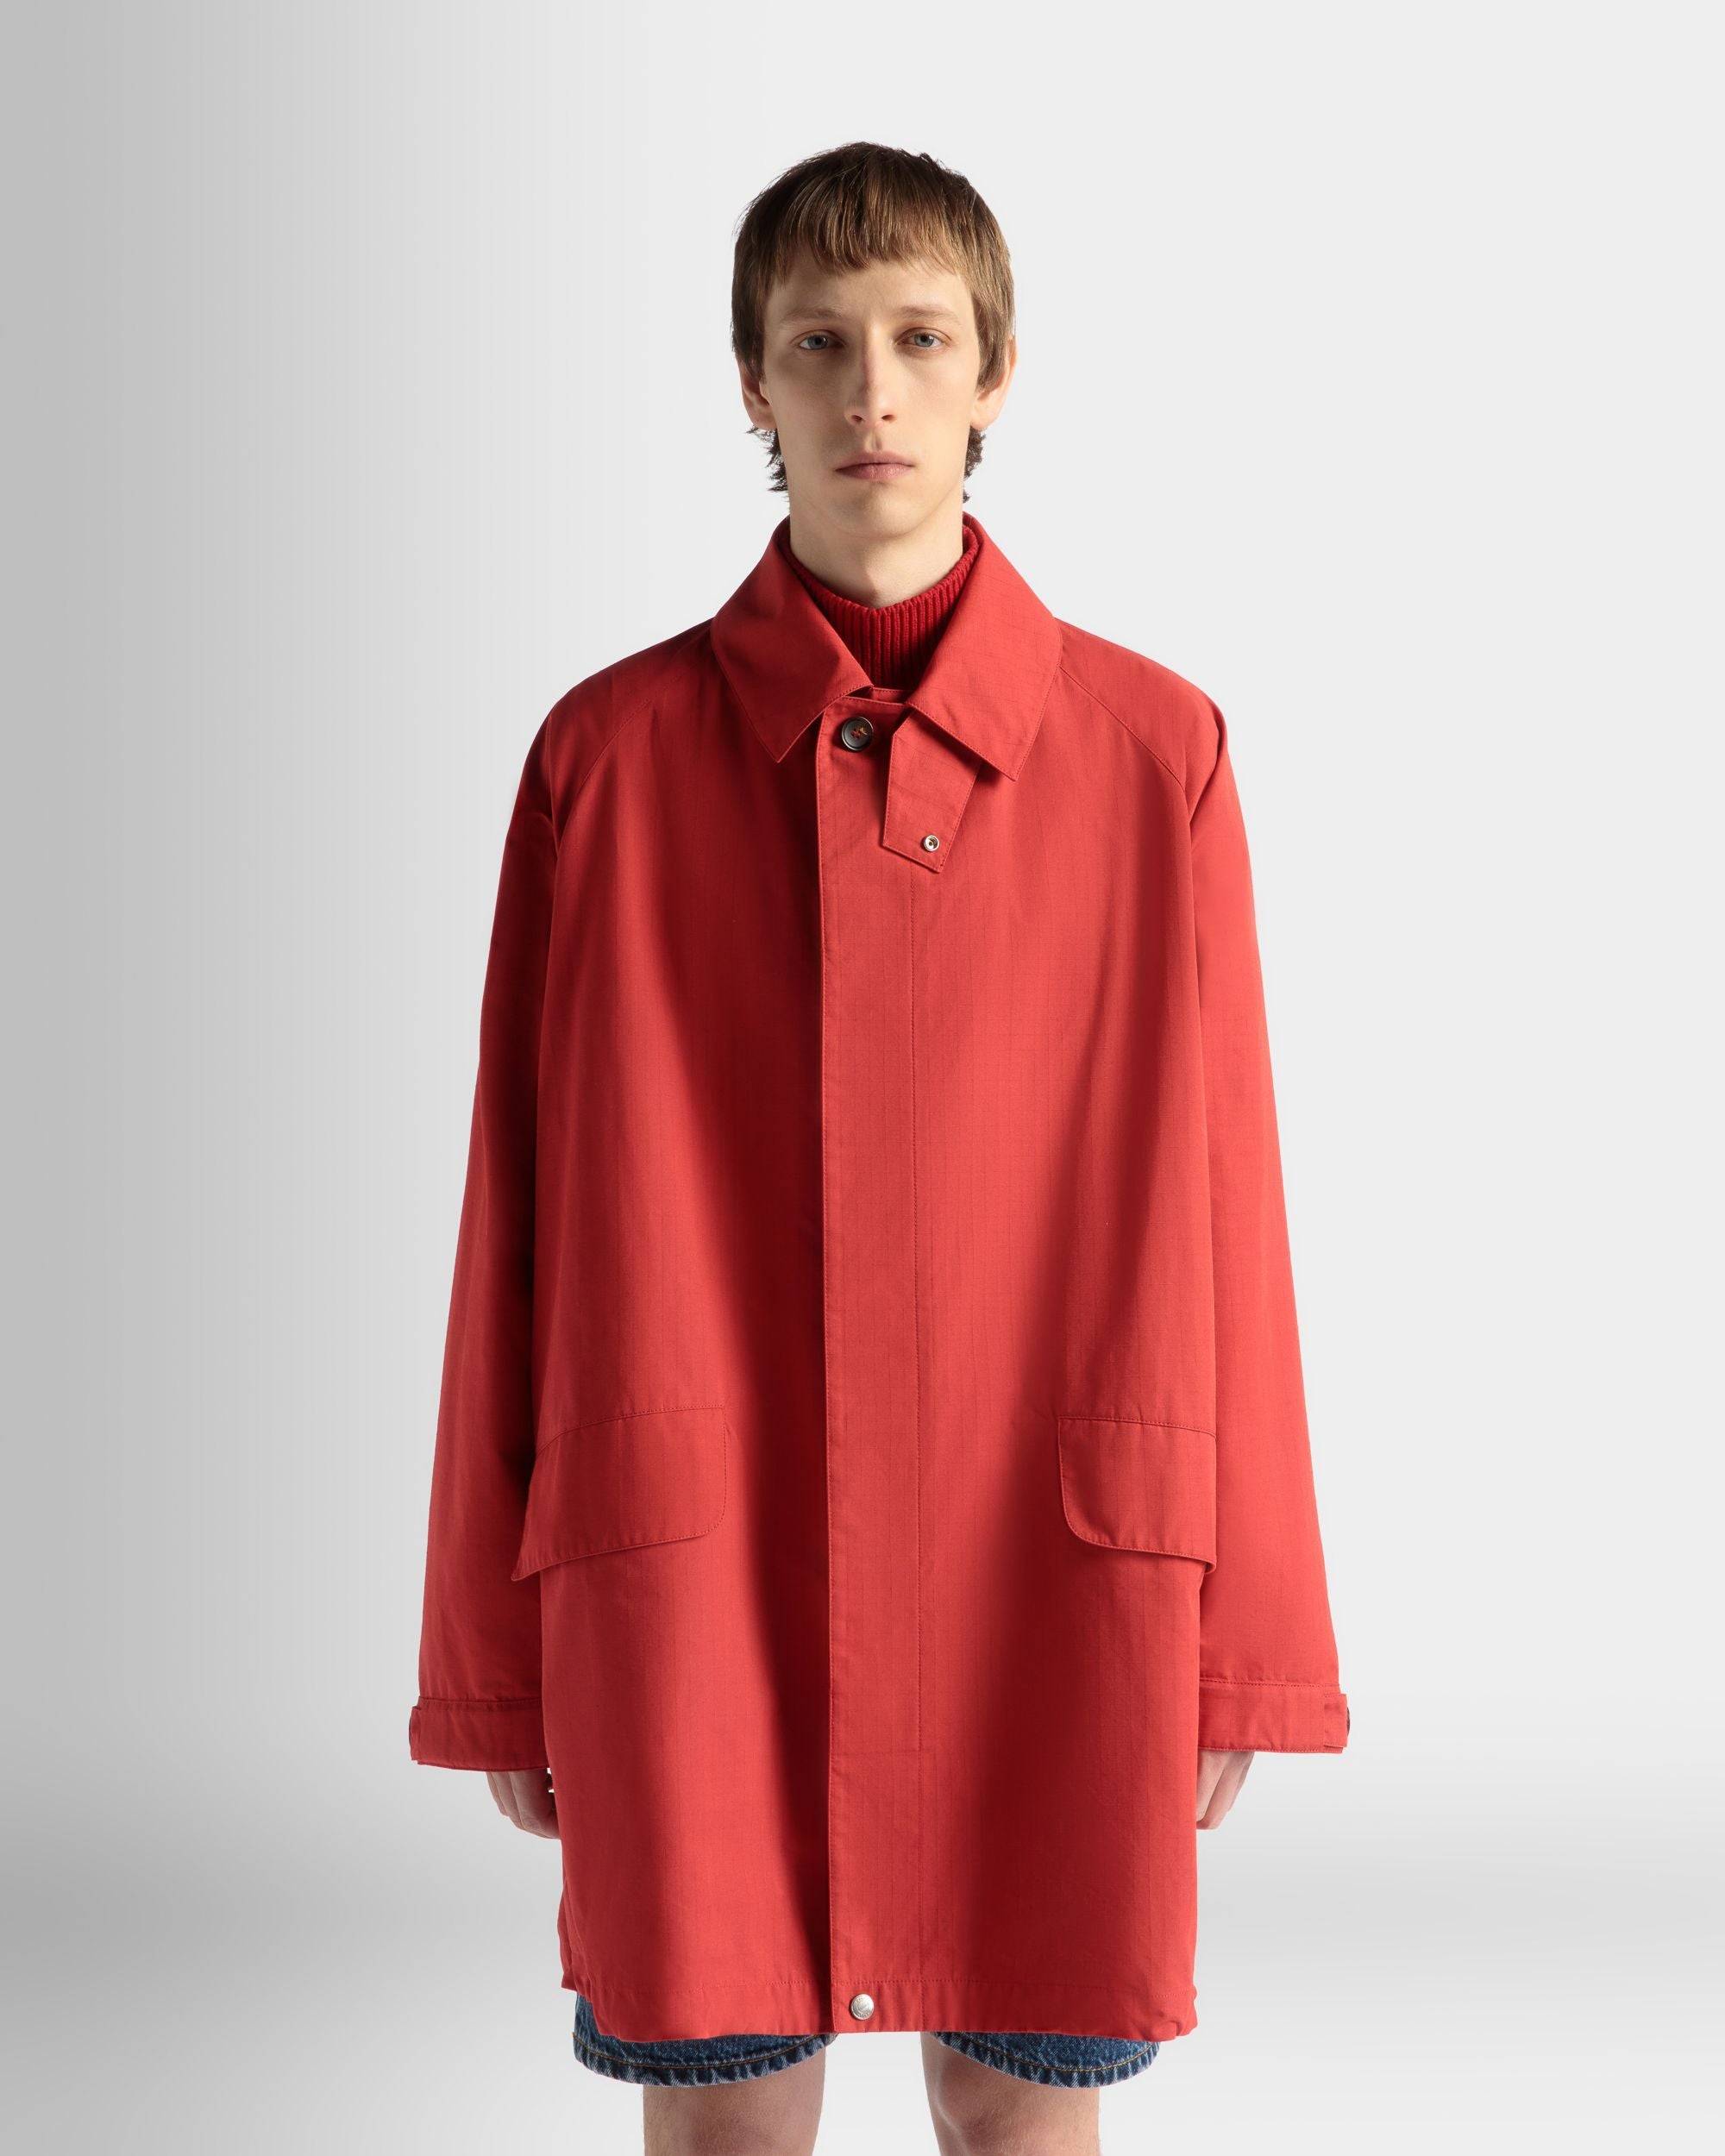 Coat in Candy Red Nylon - Men's - Bally - 03